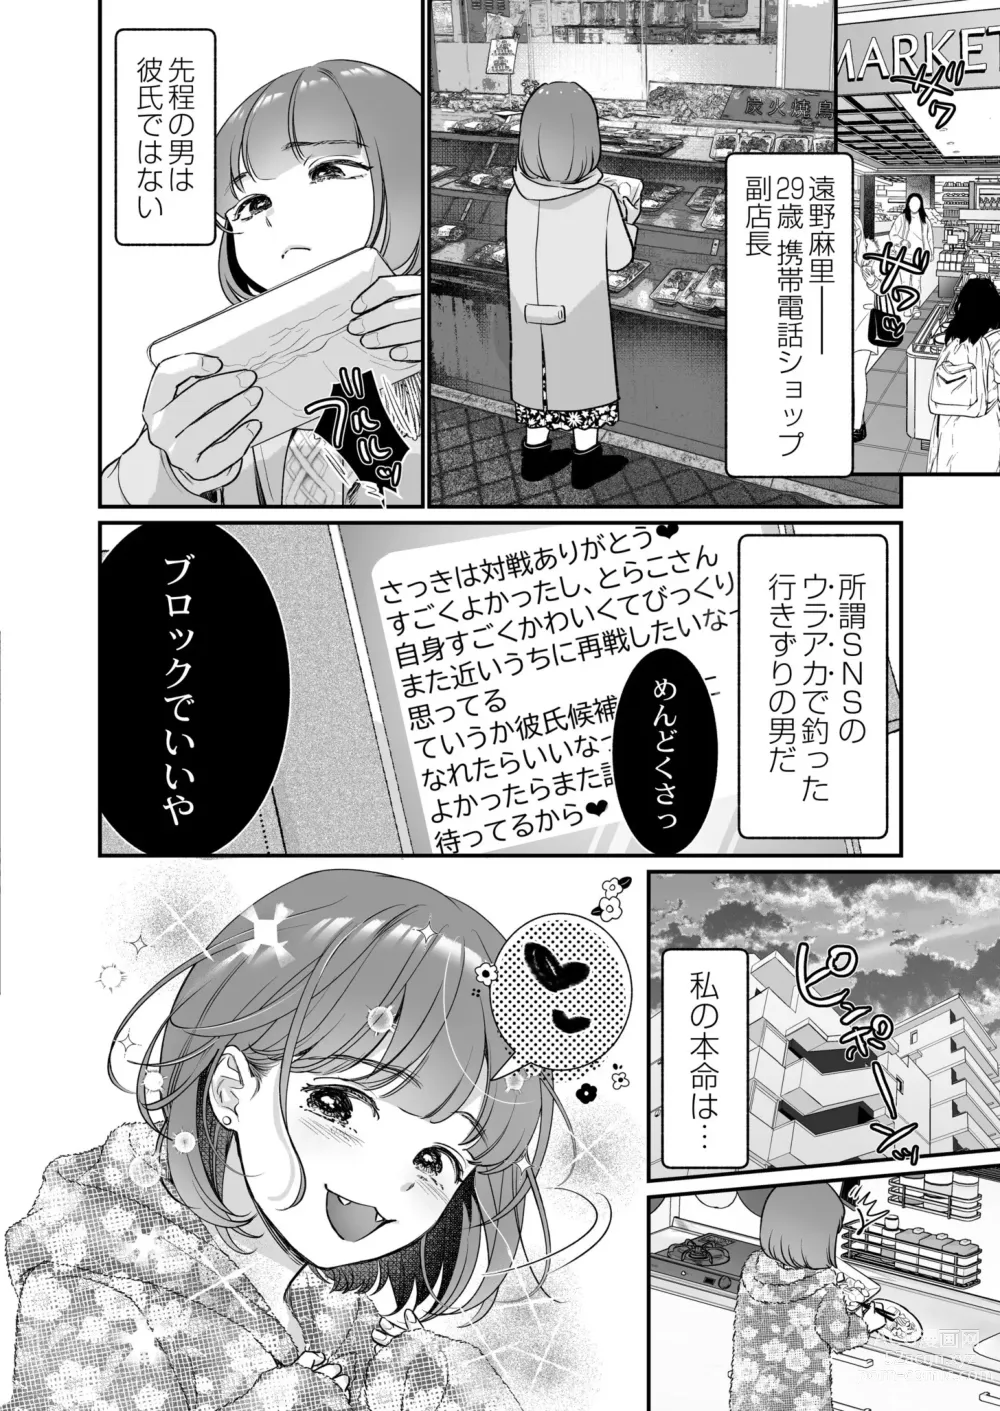 Page 4 of manga COMIC Kaien VOL.04